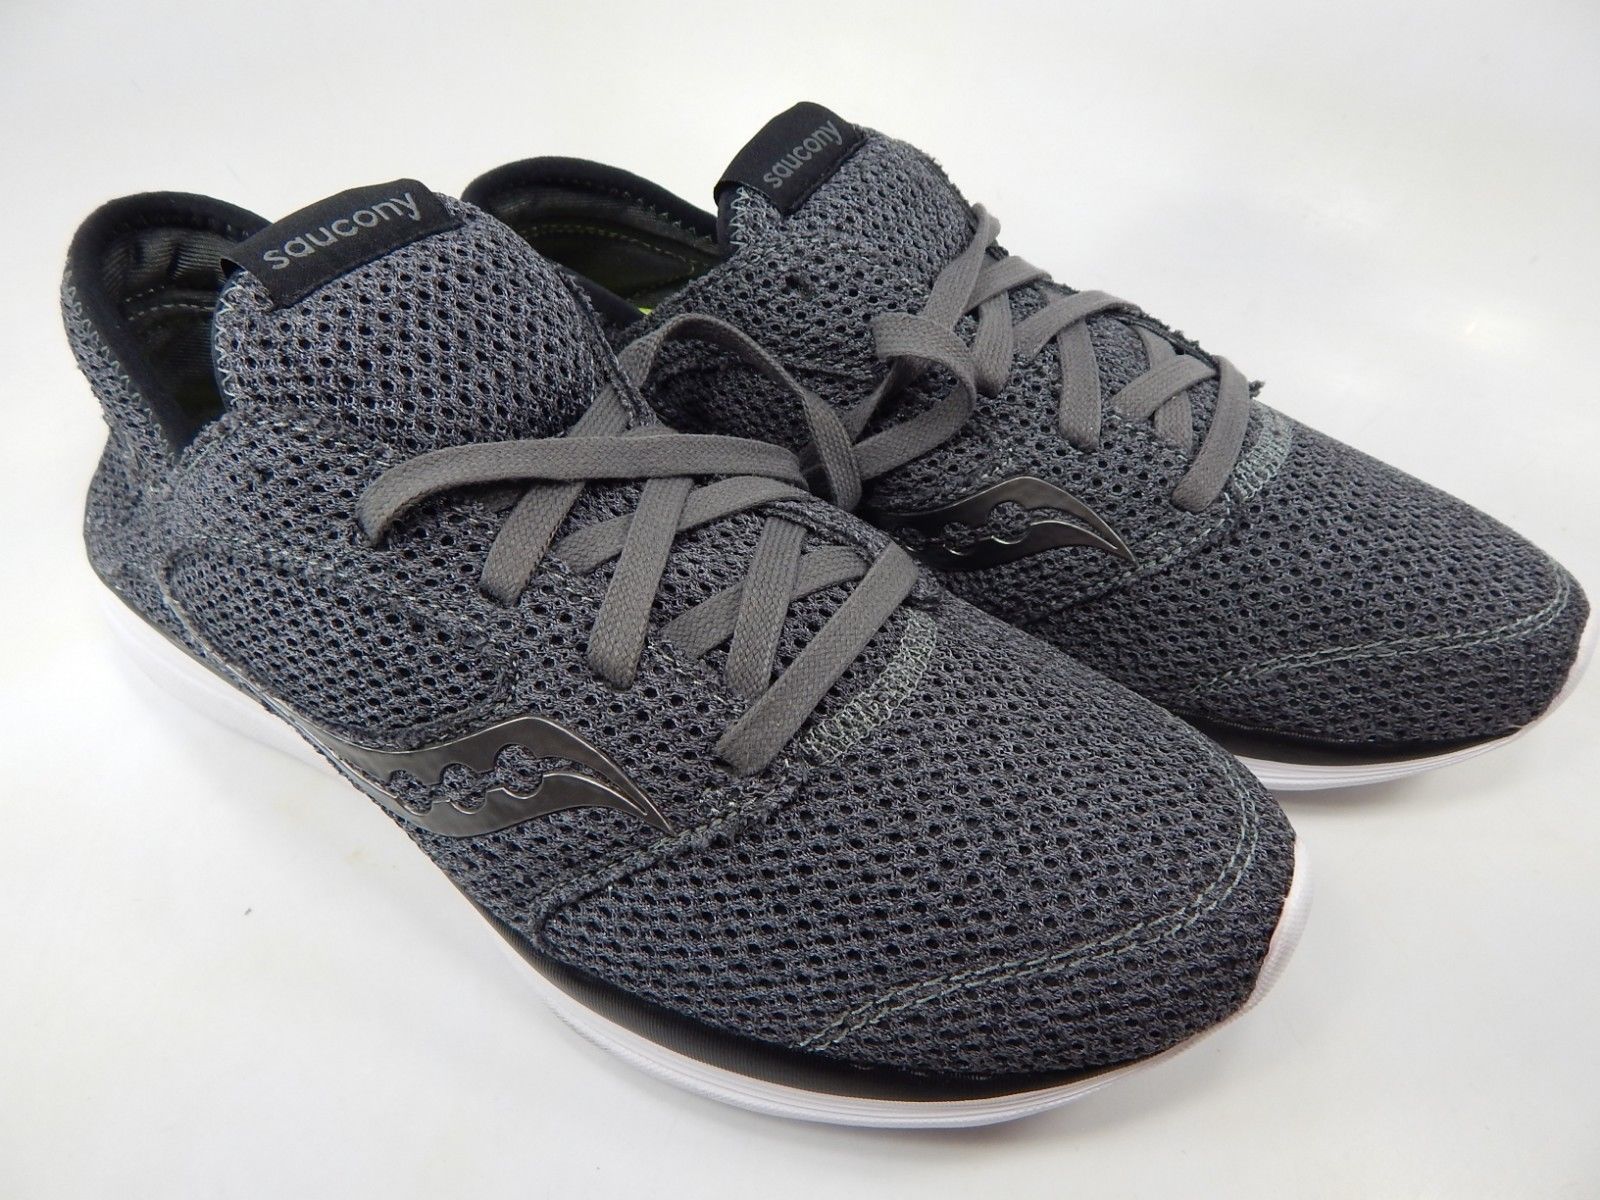 Saucony Kineta Relay Size 9 M (D) EU 42.5 Men's Running Shoes Gray ...